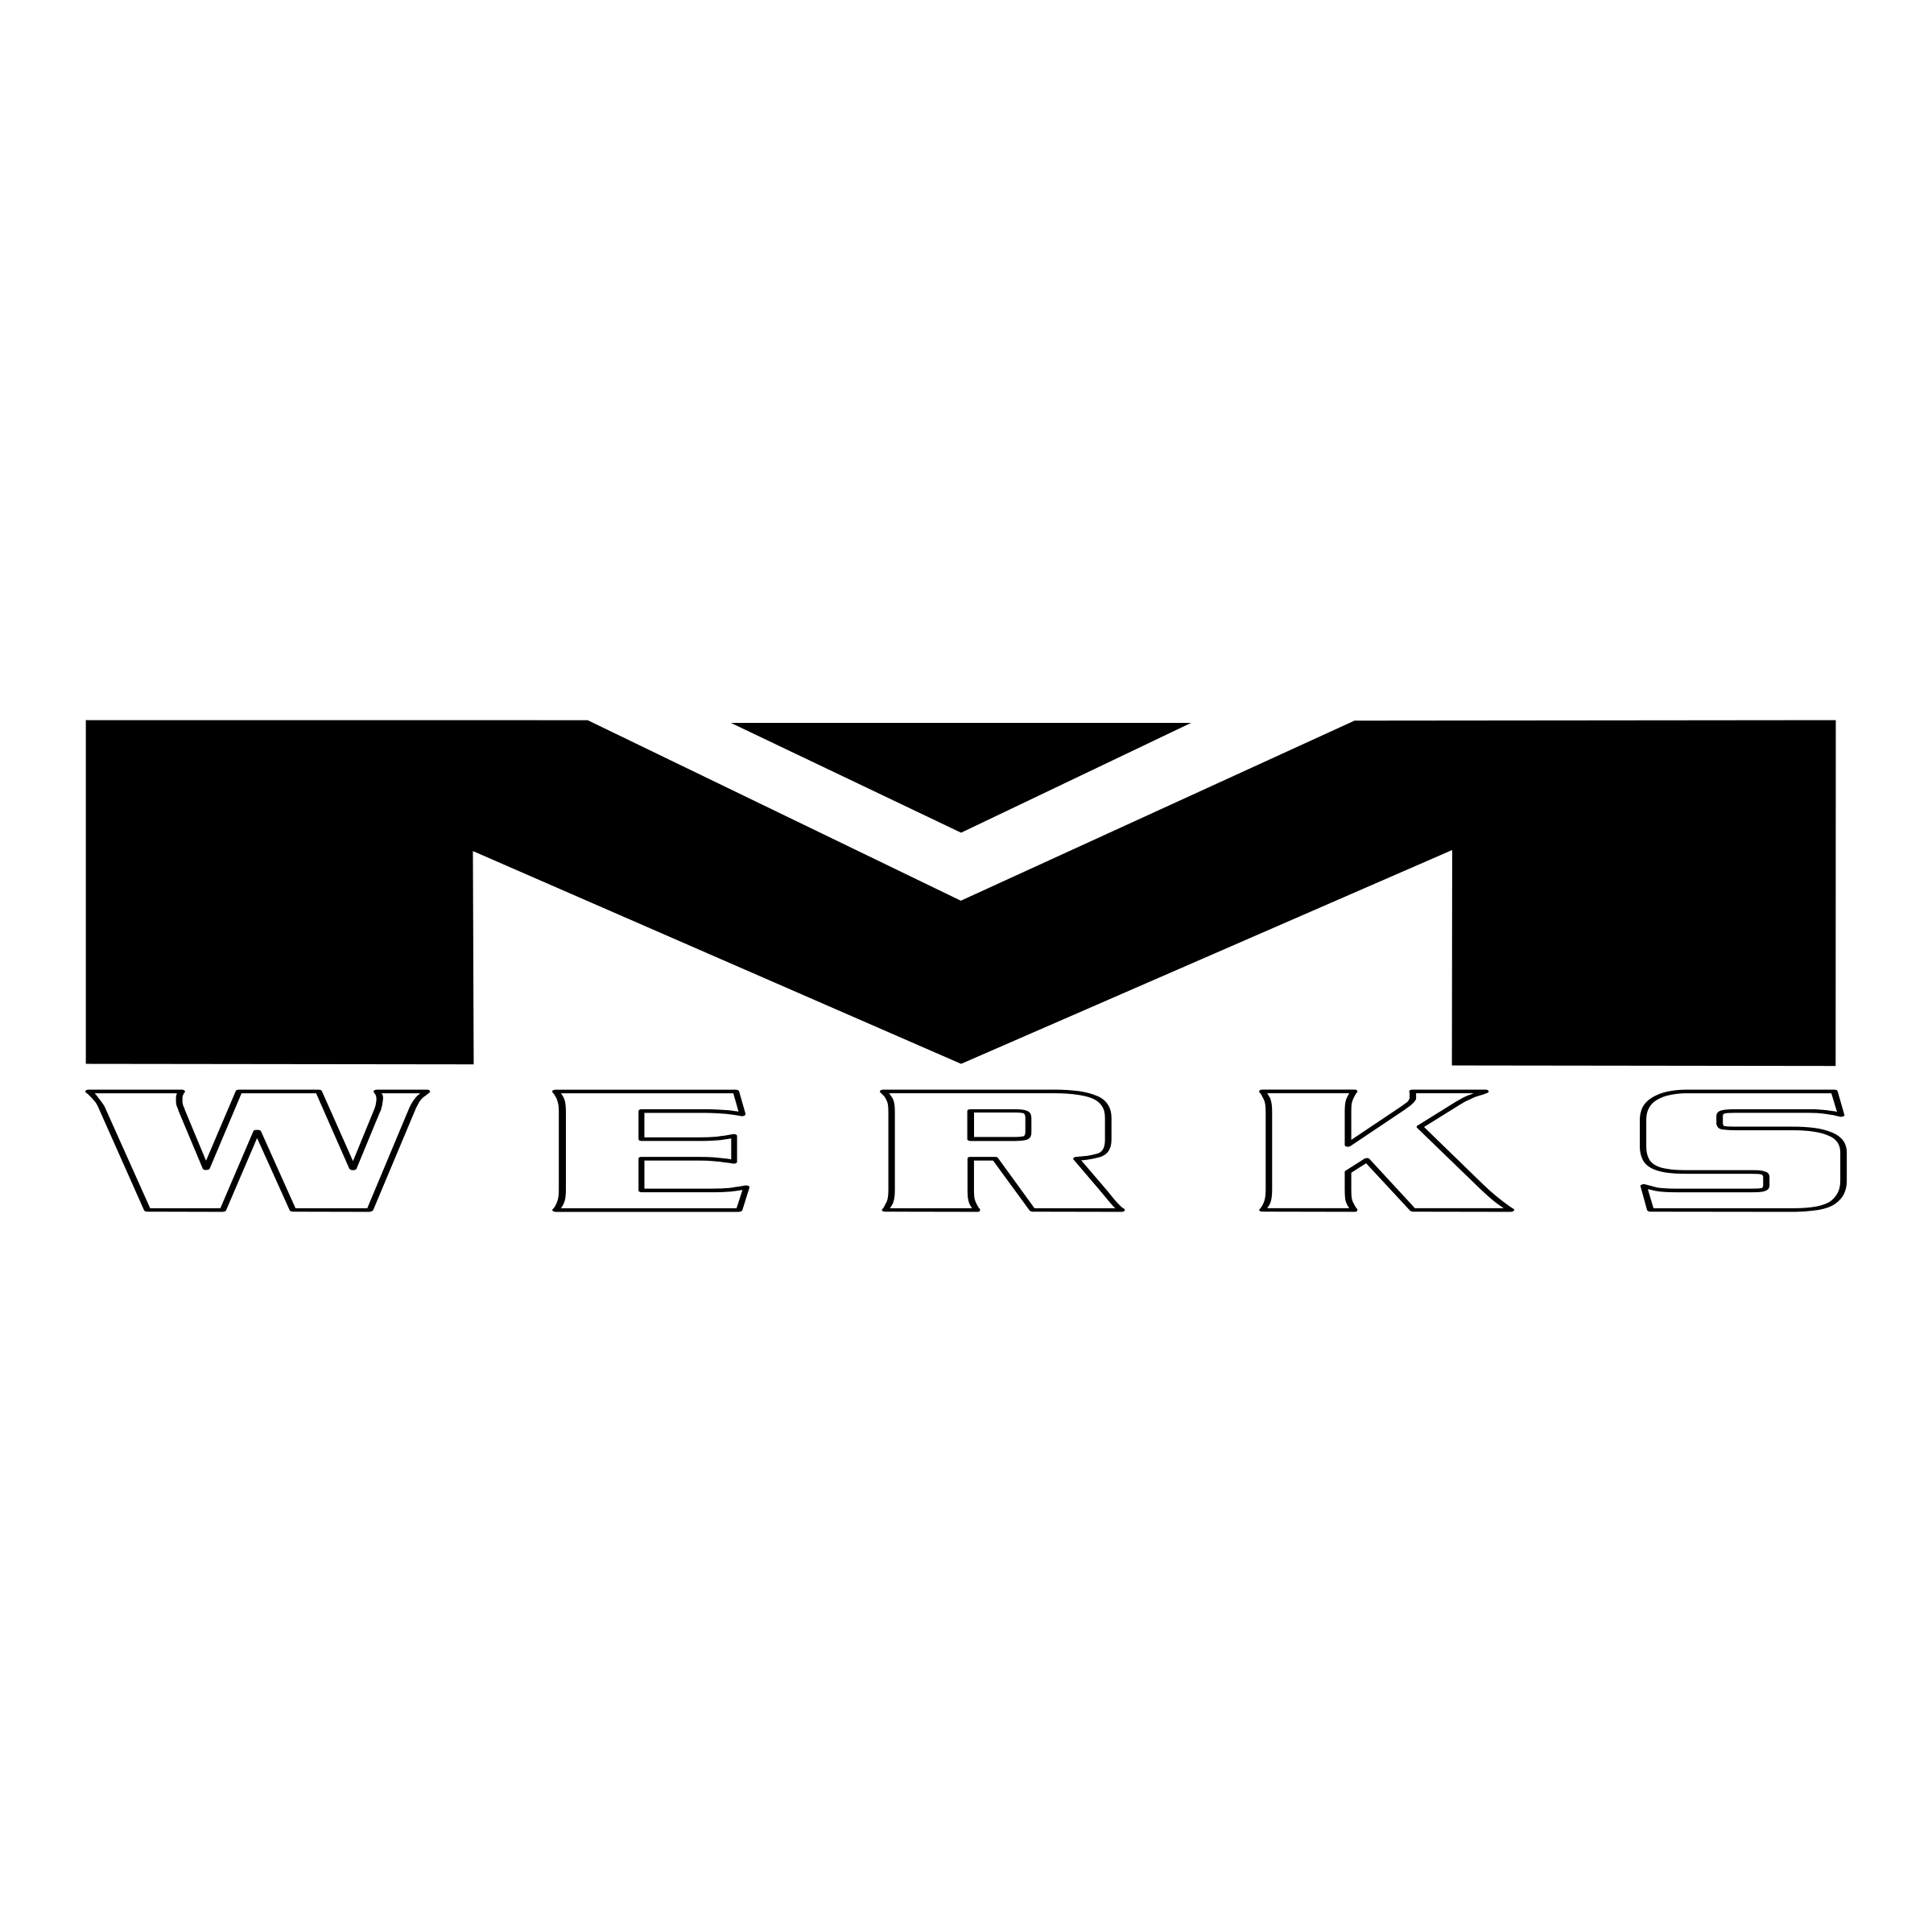 Werks Logo - M Werks Logo PNG Transparent & SVG Vector - Freebie Supply